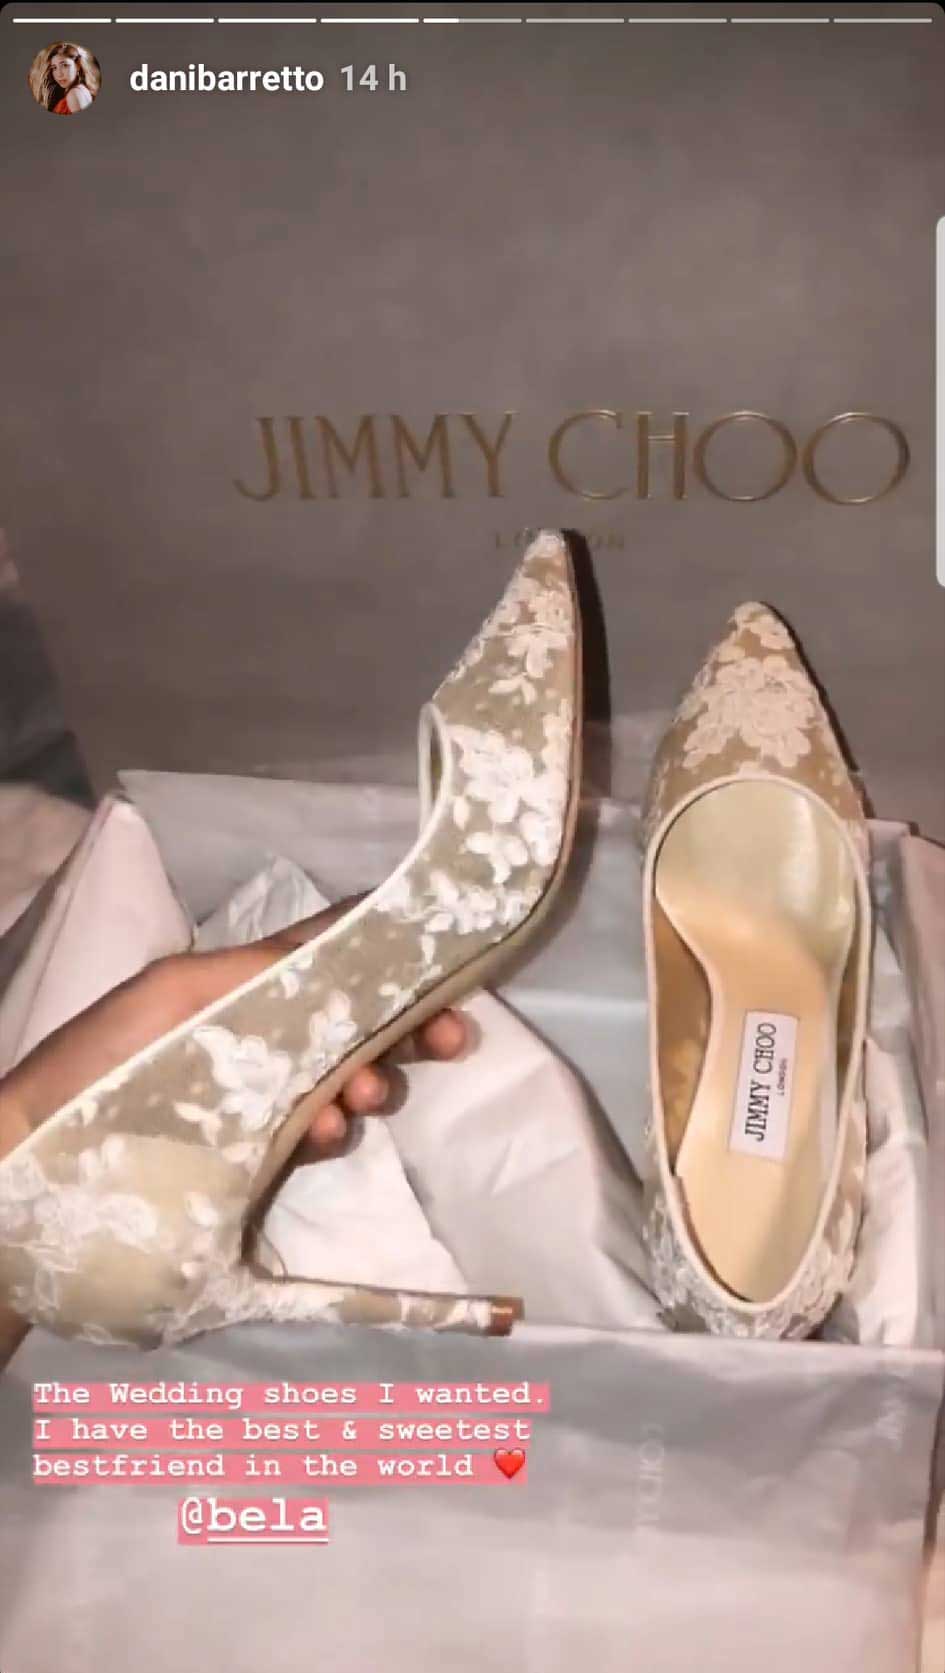 jimmy choo wedding shoes 2019